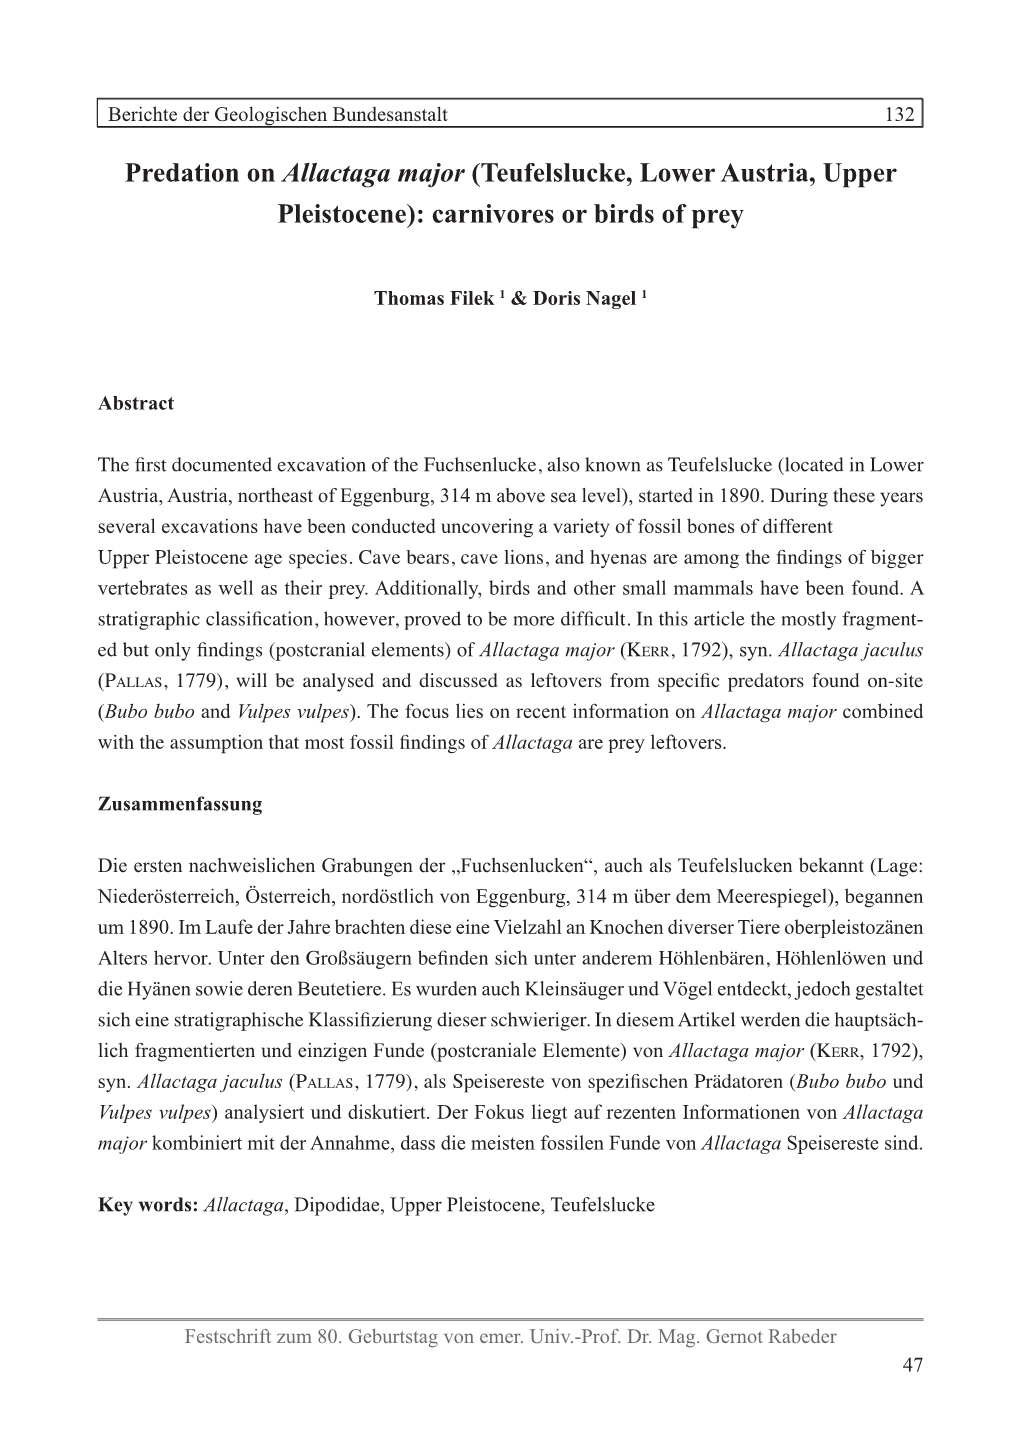 Predation on Allactaga Major (Teufelslucke, Lower Austria, Upper Pleistocene): Carnivores Or Birds of Prey